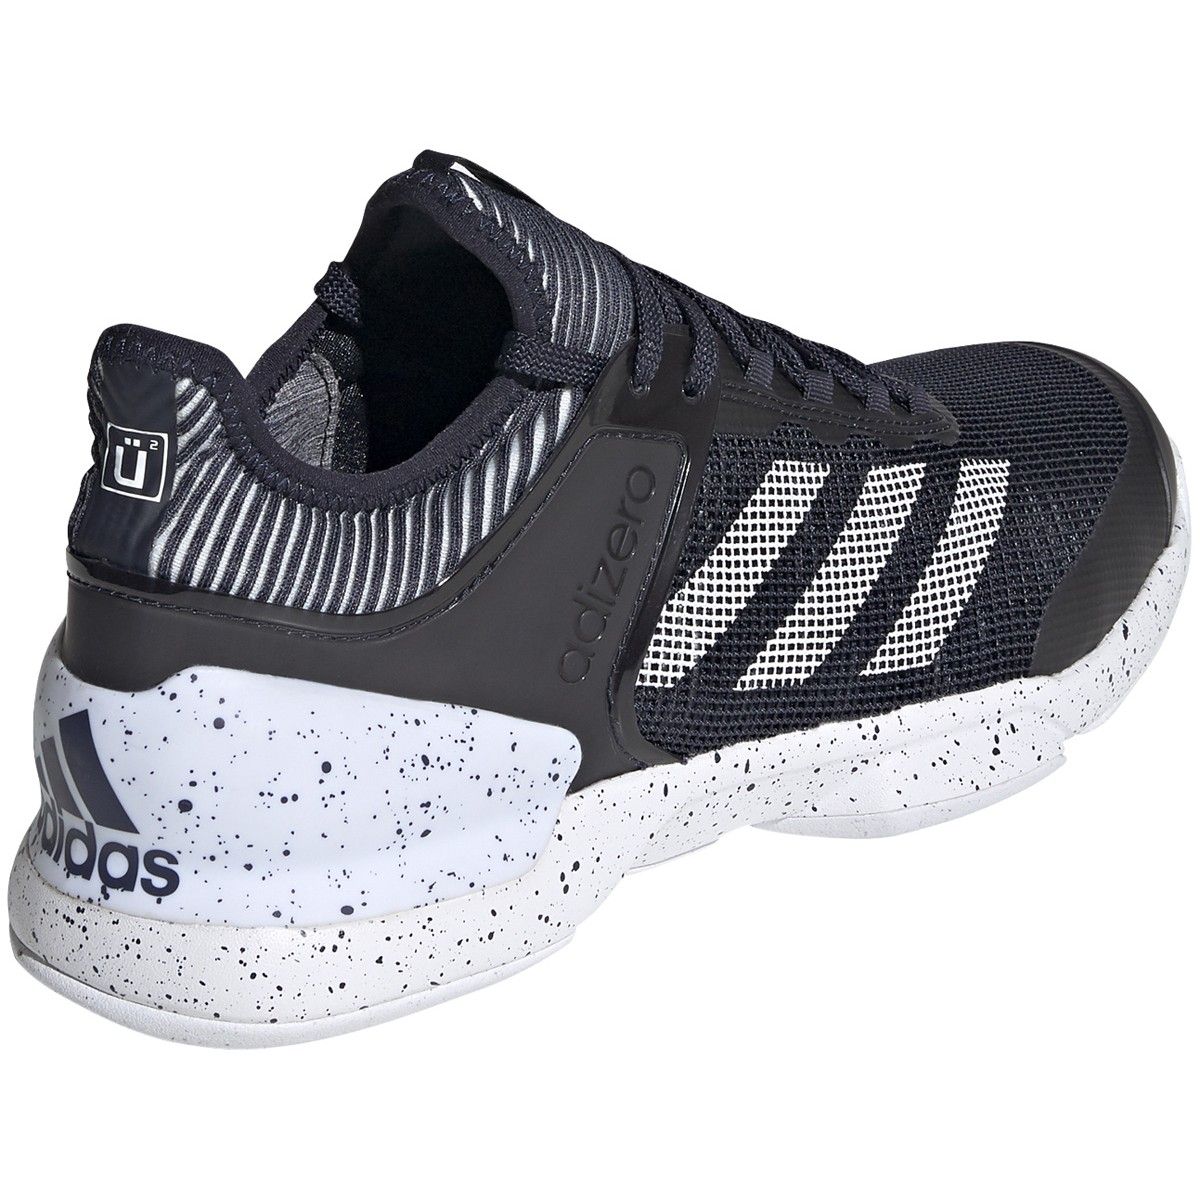 adidas Adizero Ubersonic 2 Men's Tennis Shoes FW0066